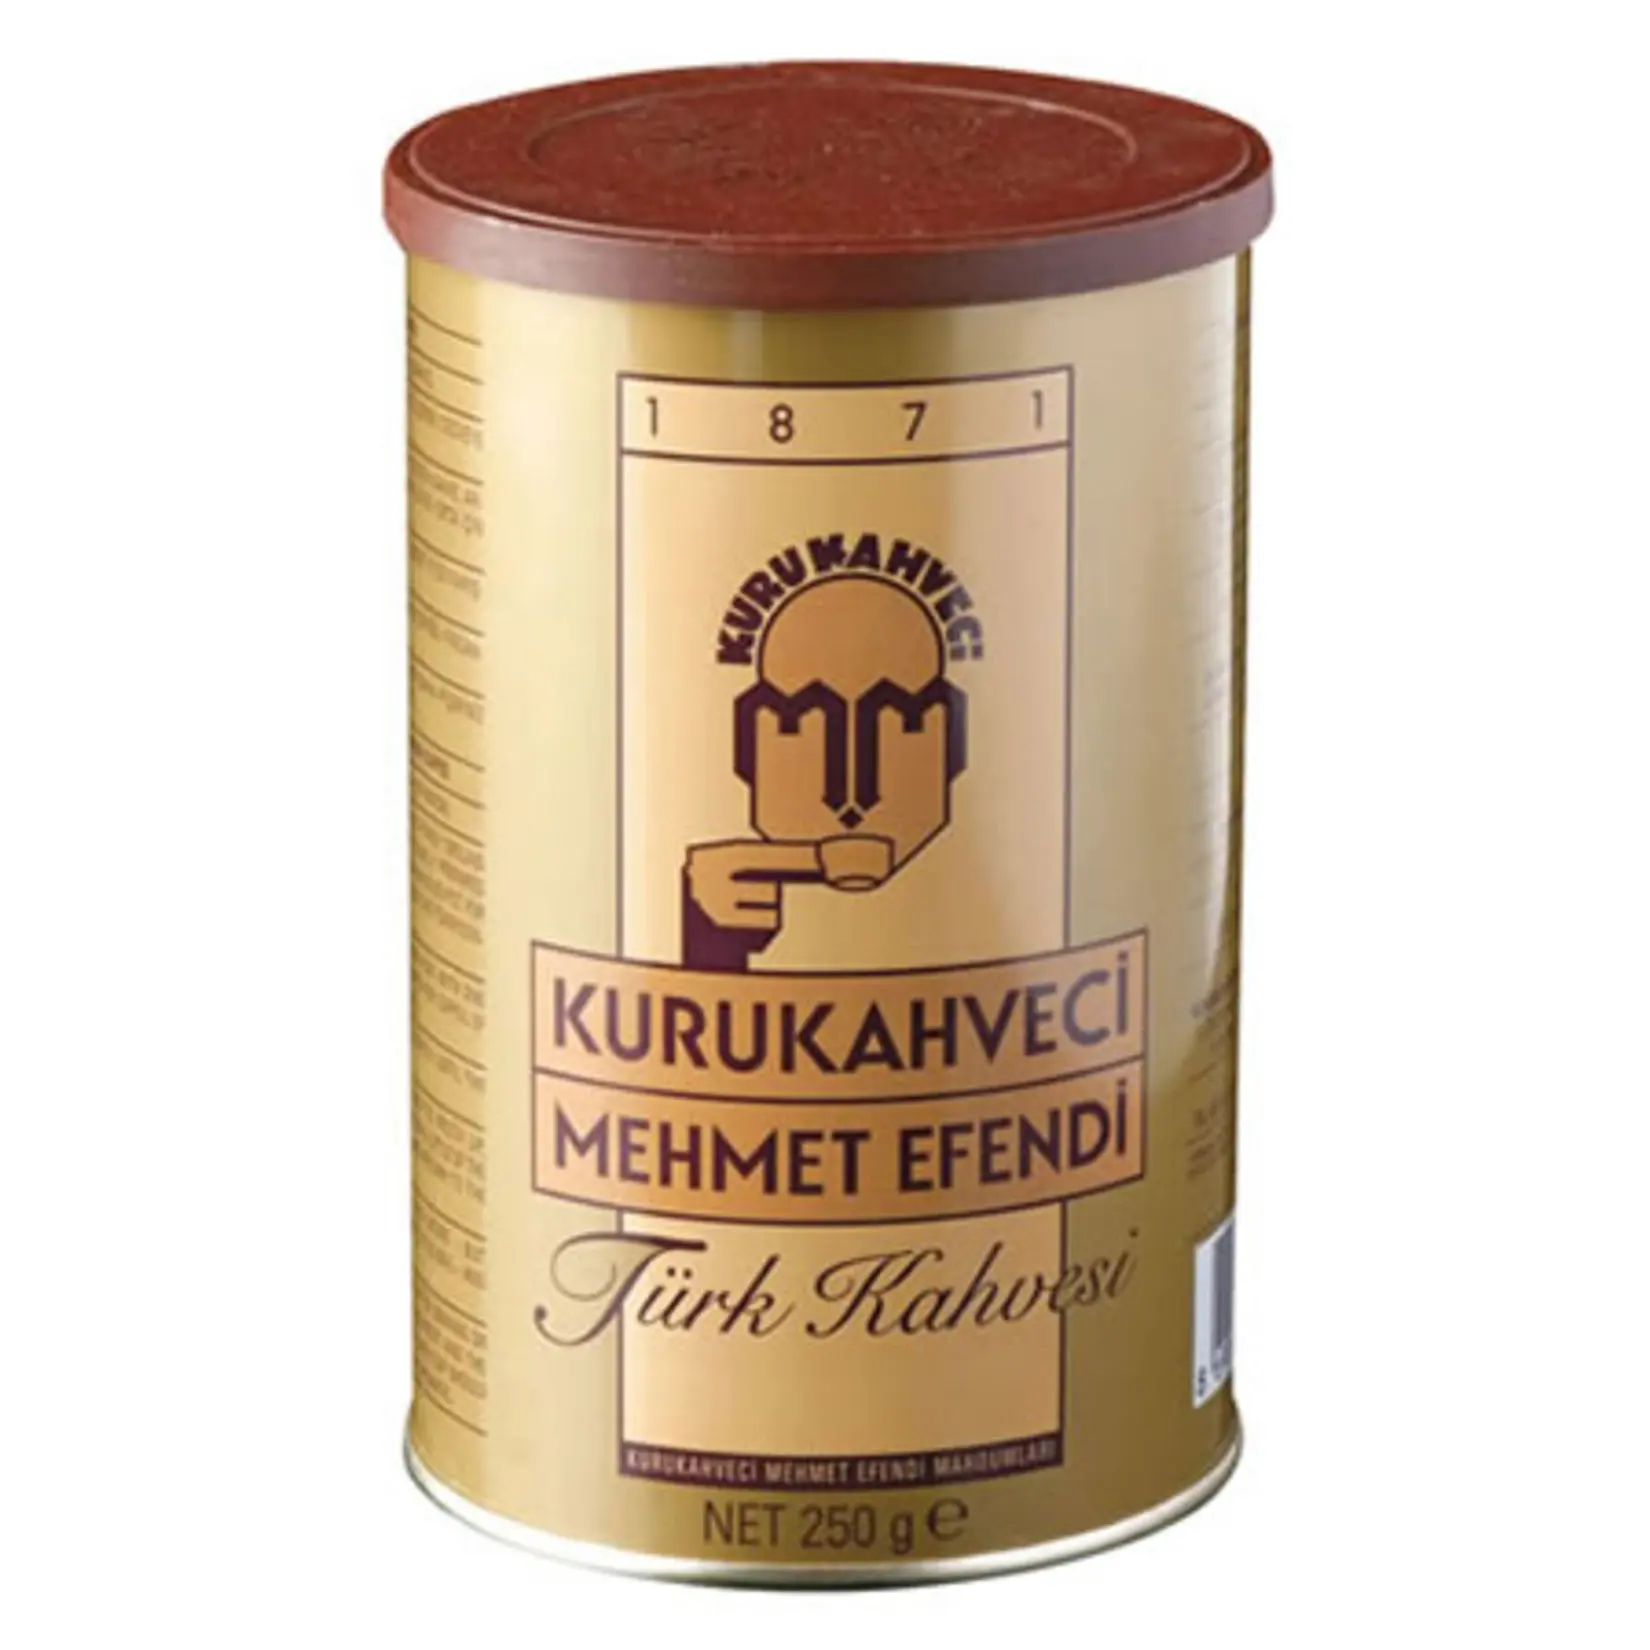 
SPECIAL MEHMET EFENDI INSTANT TURKISH COFFEE 250GR  (1600181502413)